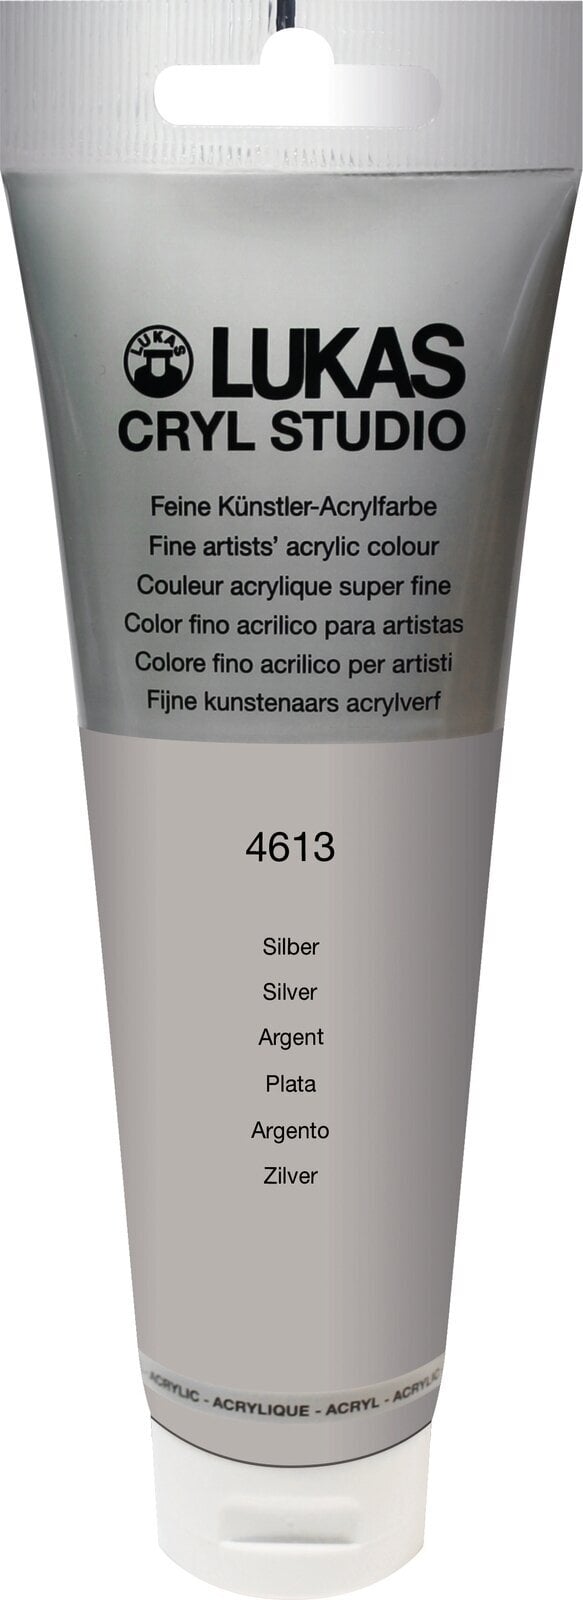 Akrylová barva Lukas Cryl Studio Acrylic Paint Plastic Tube Akrylová barva Silver 125 ml 1 ks